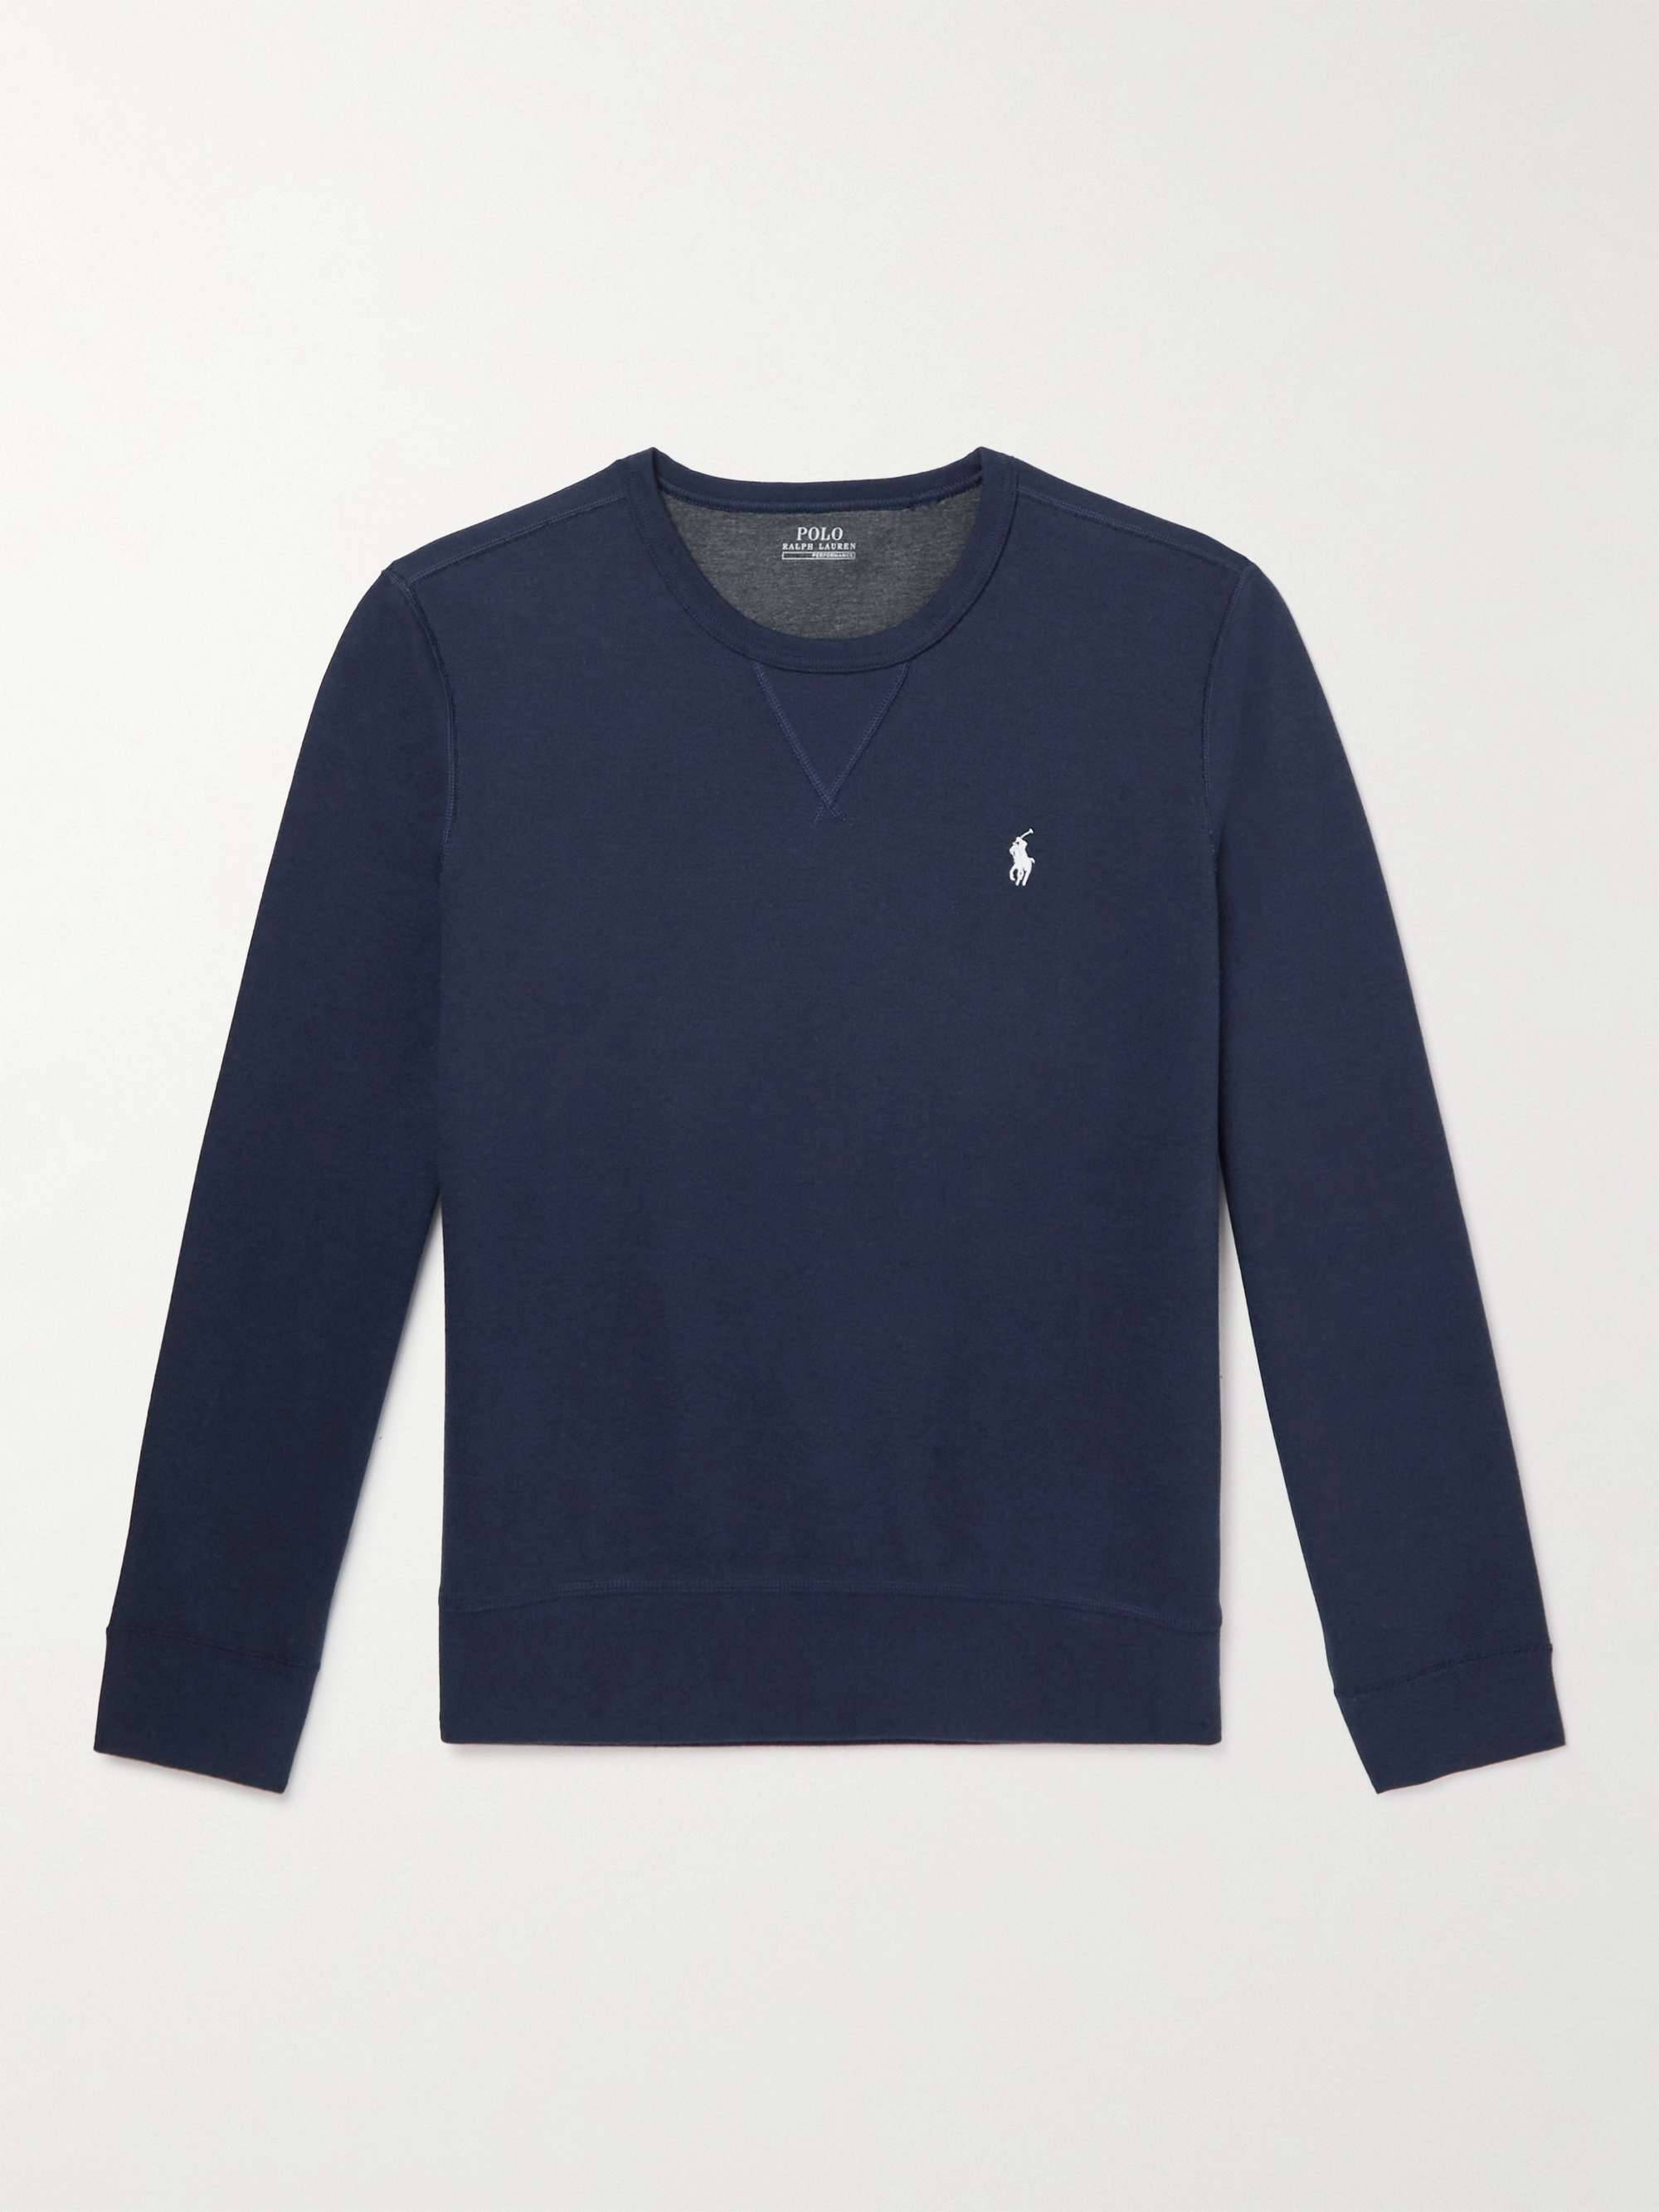 Polo Ralph Lauren Logo-Embroidered Jersey Sweatshirt - Men - Navy Sweats - M